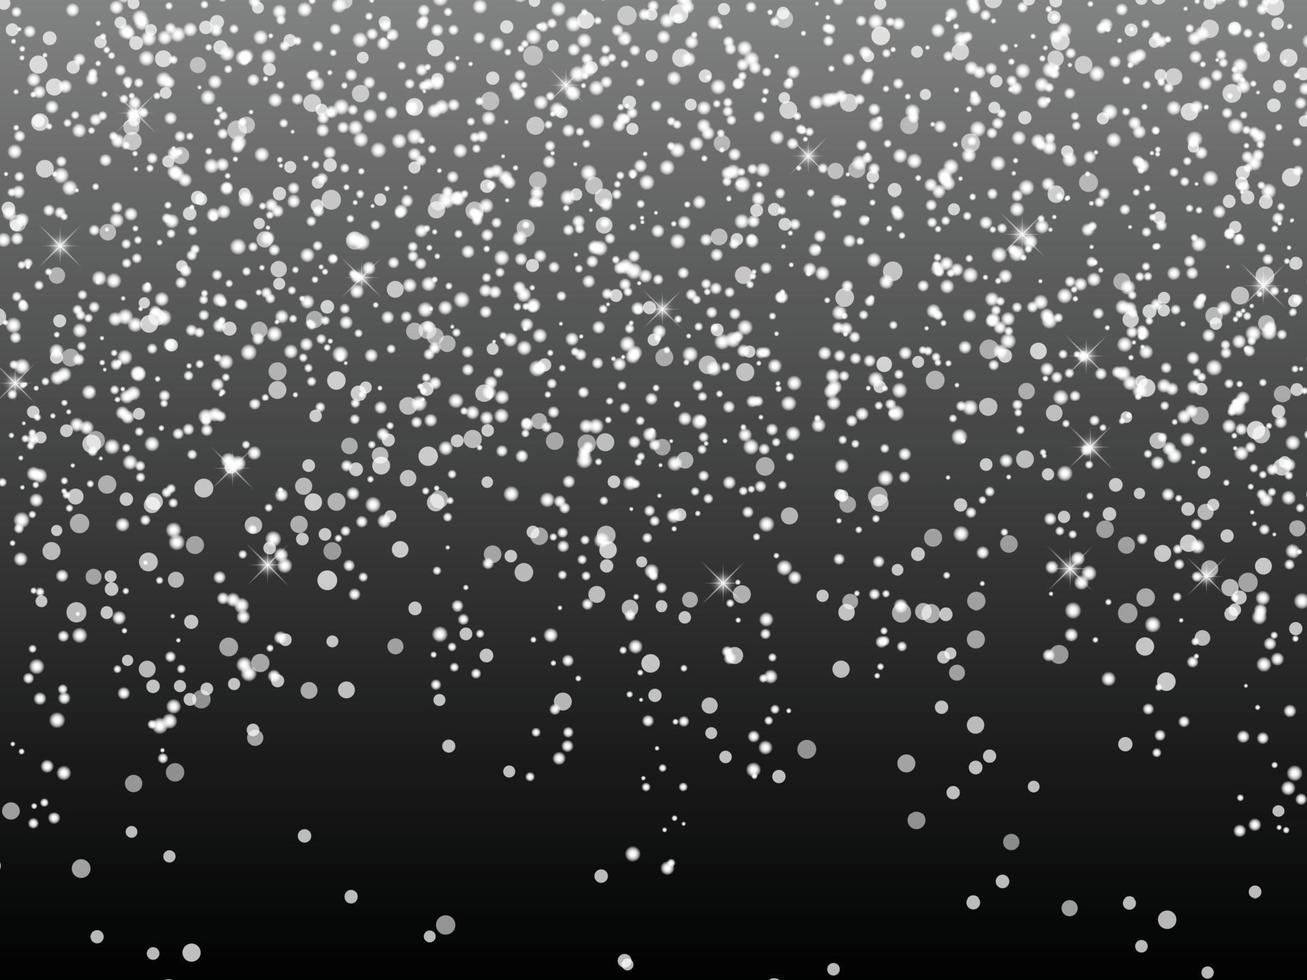 Snowfall on black background. vector